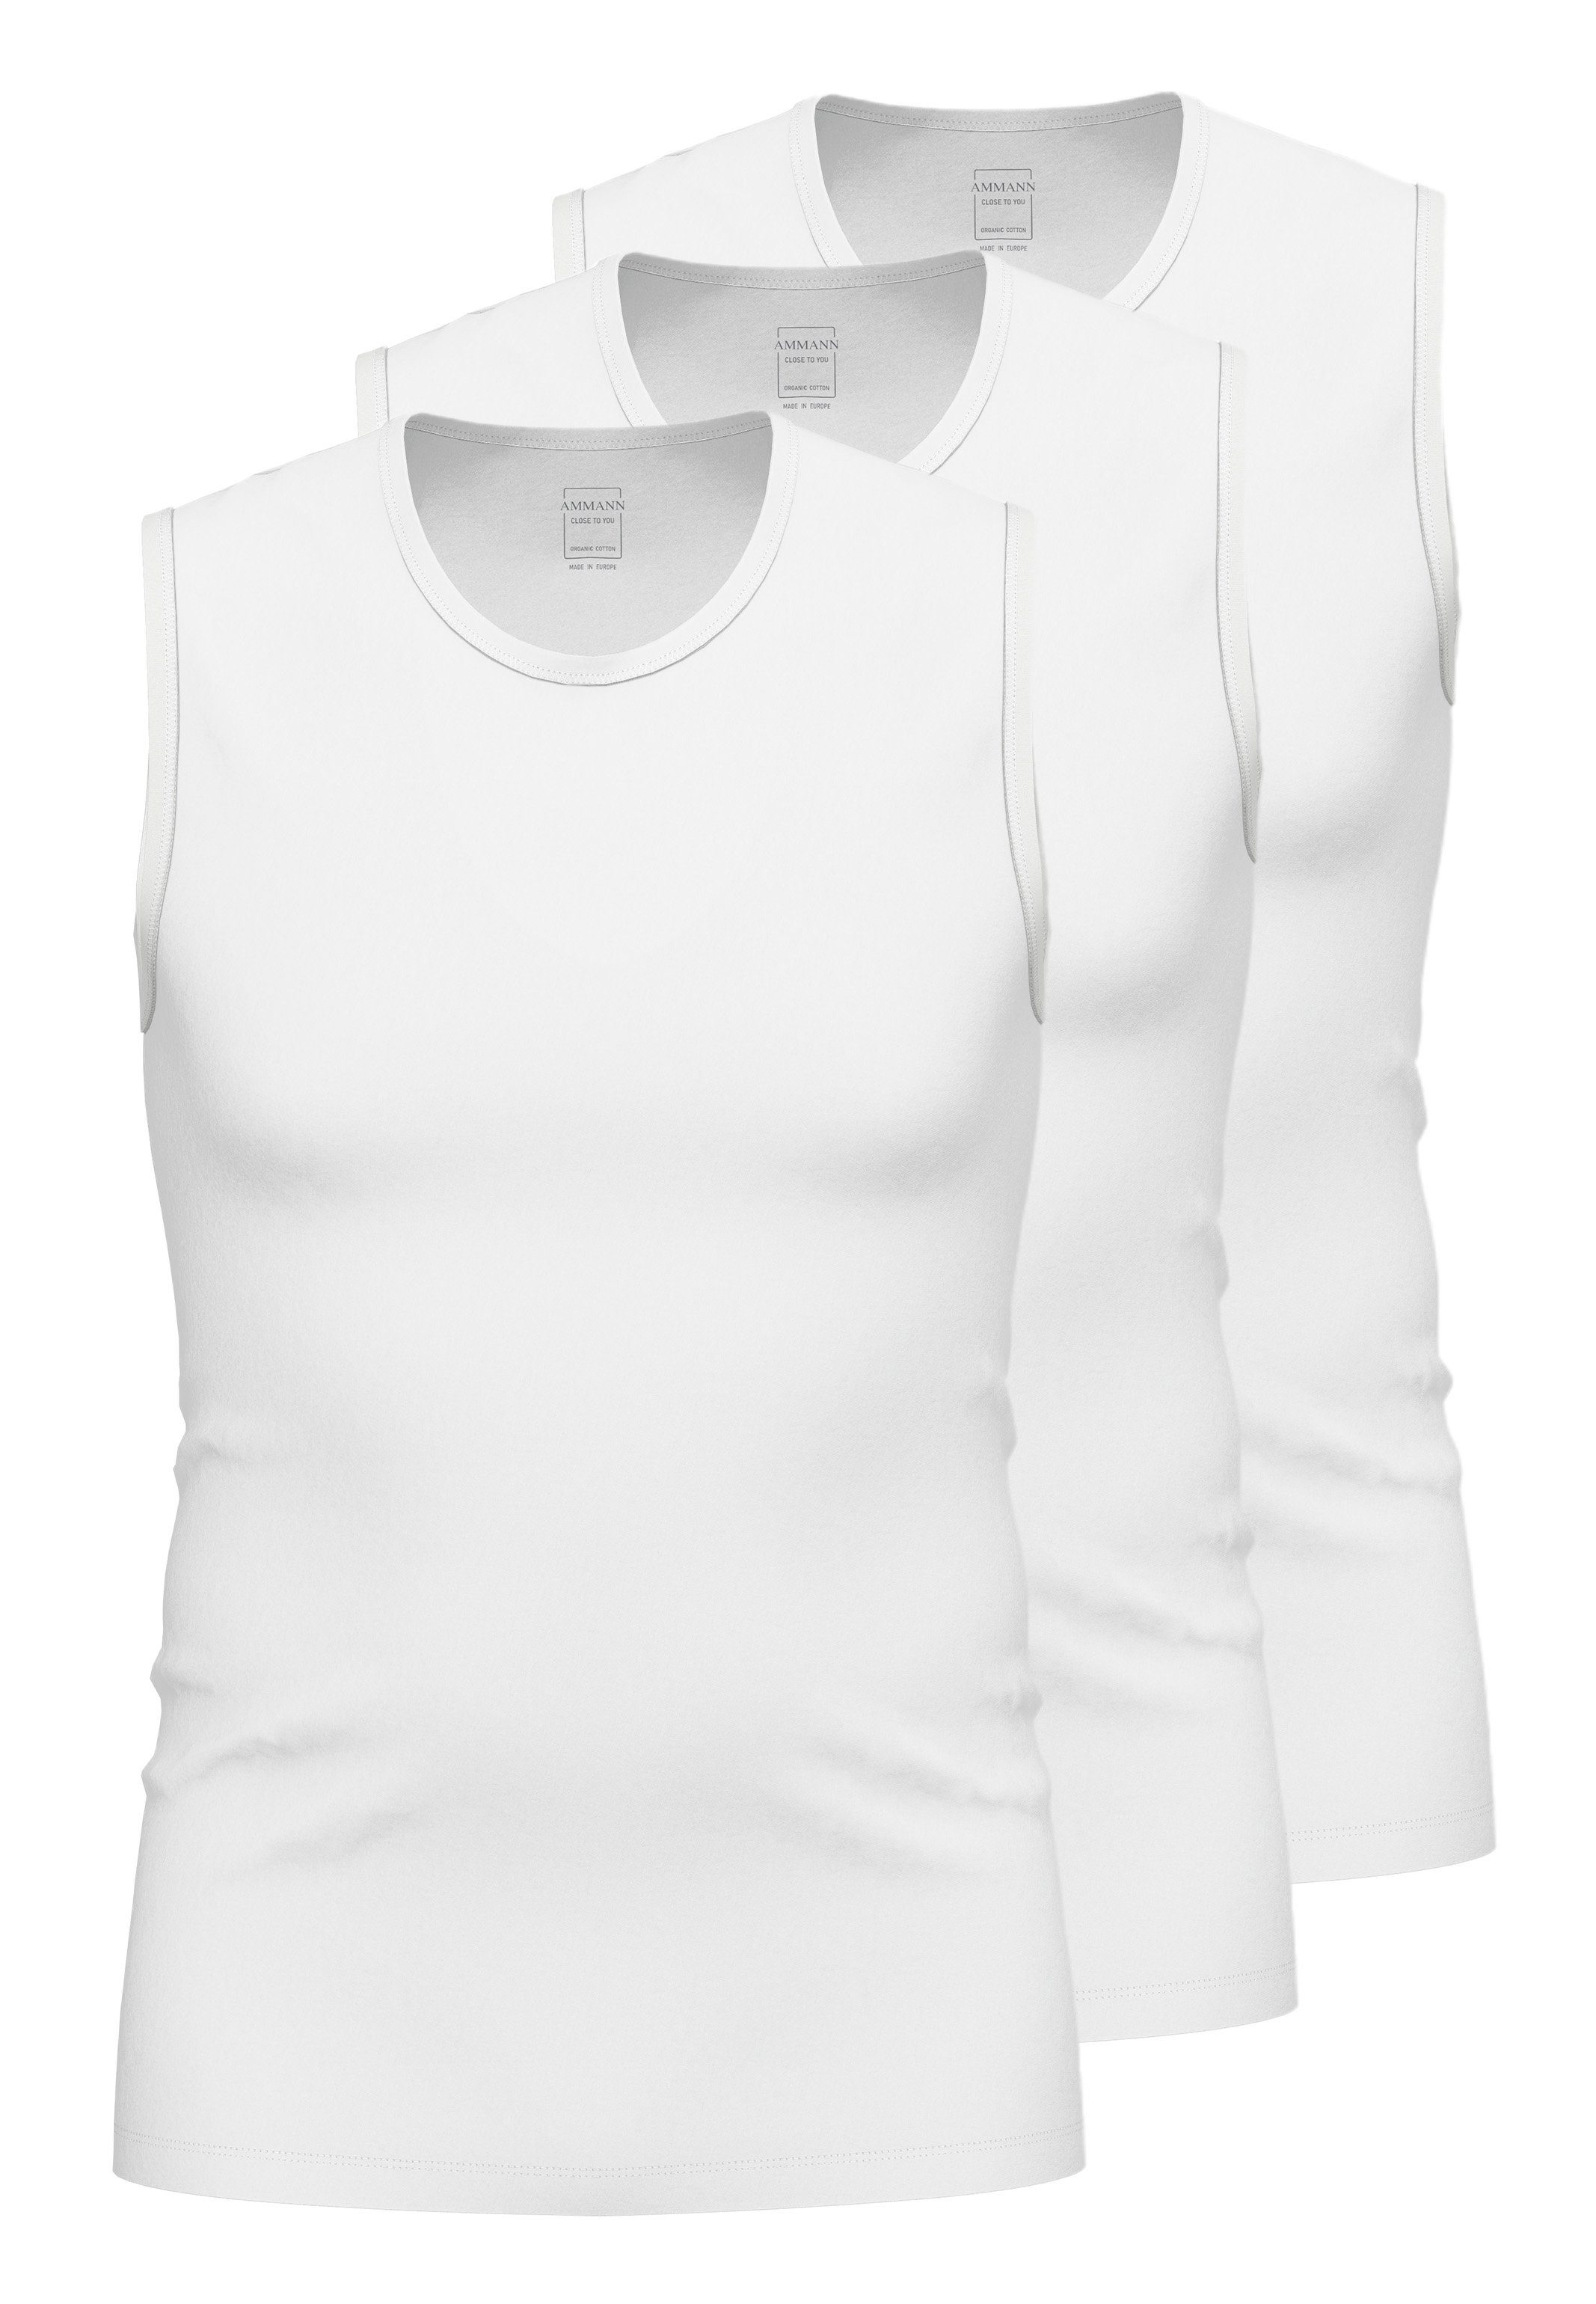 Ammann Unterhemd 3er Pack Close to you (Spar-Set, 3-St) Unterhemd / Tanktop - Baumwolle - Atmungsaktiv - Elastisches Material Weiß